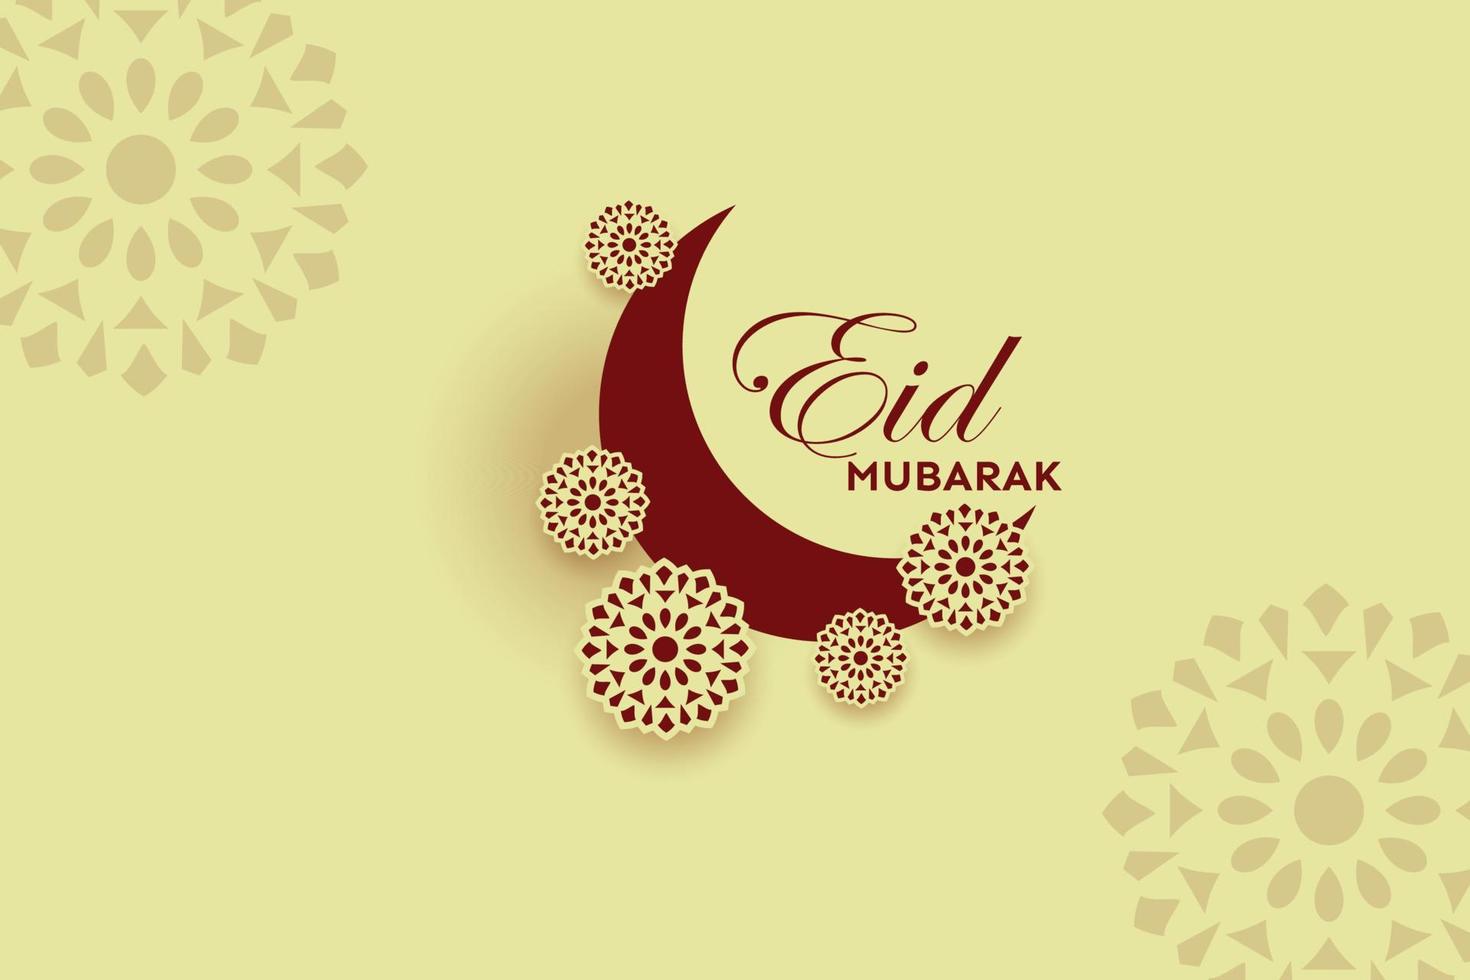 Eid mubarak with Islamic calligraphy, Eid al fitr the English calligraphy means Happy eid. Vector illustration. 3d modern Islamic holiday banner, suitable for eid, Eid al Fitr.